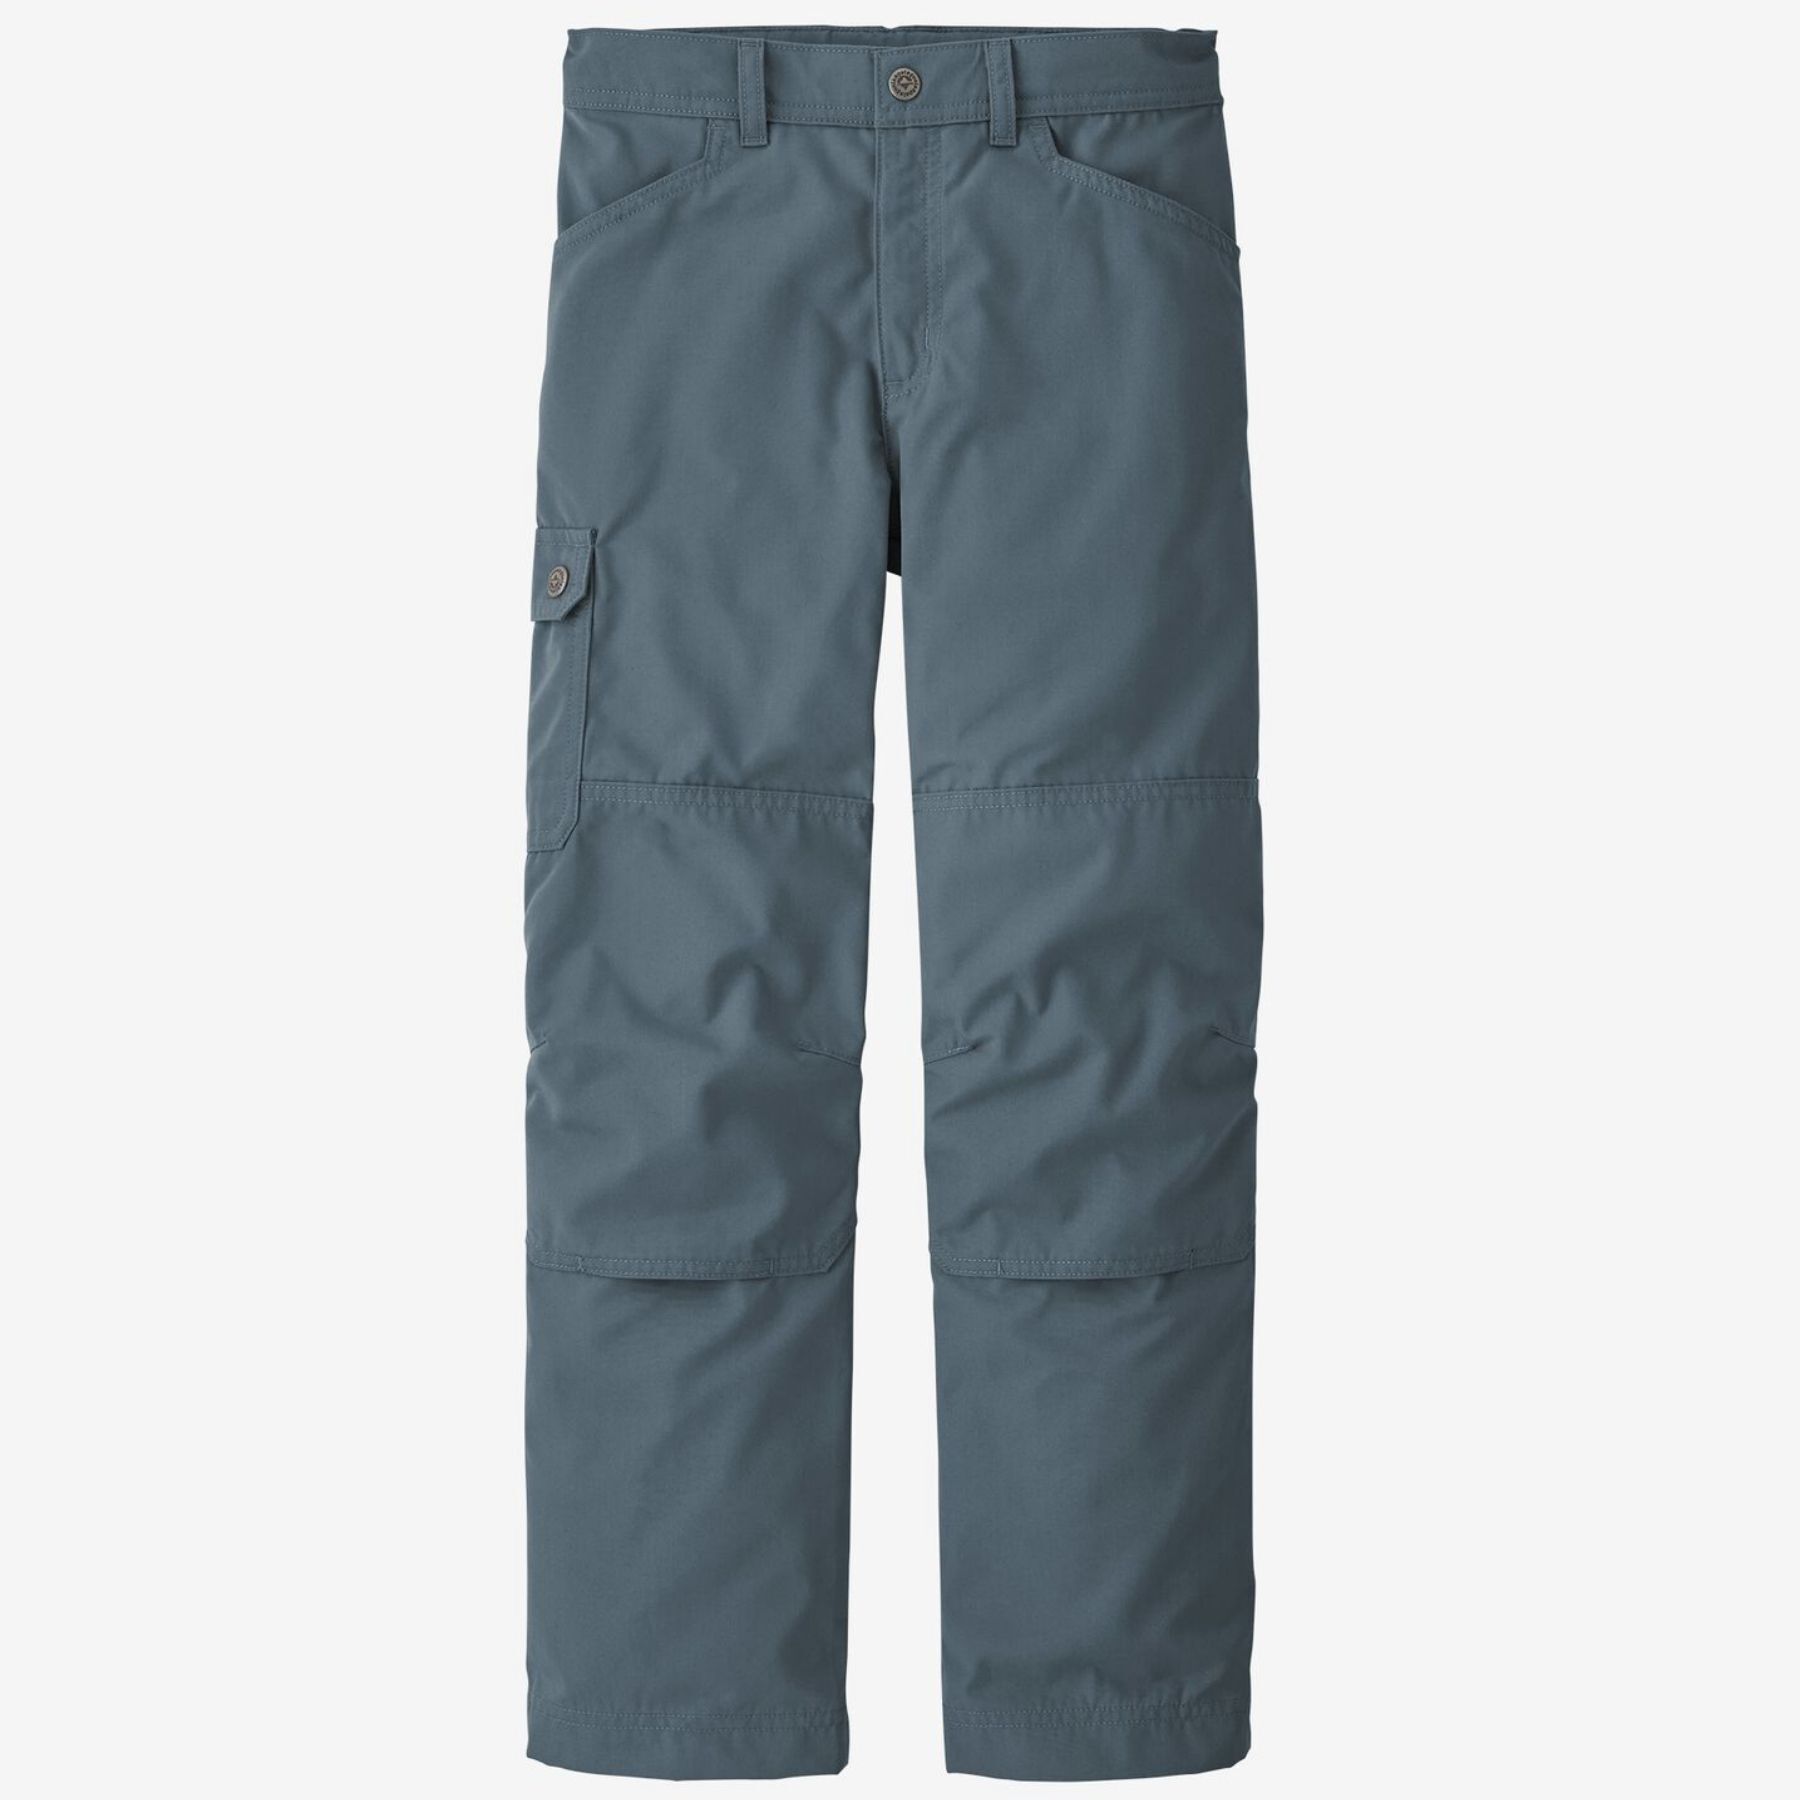 Patagonia Boys' Durable Hike Pants - Walking trousers - Kids